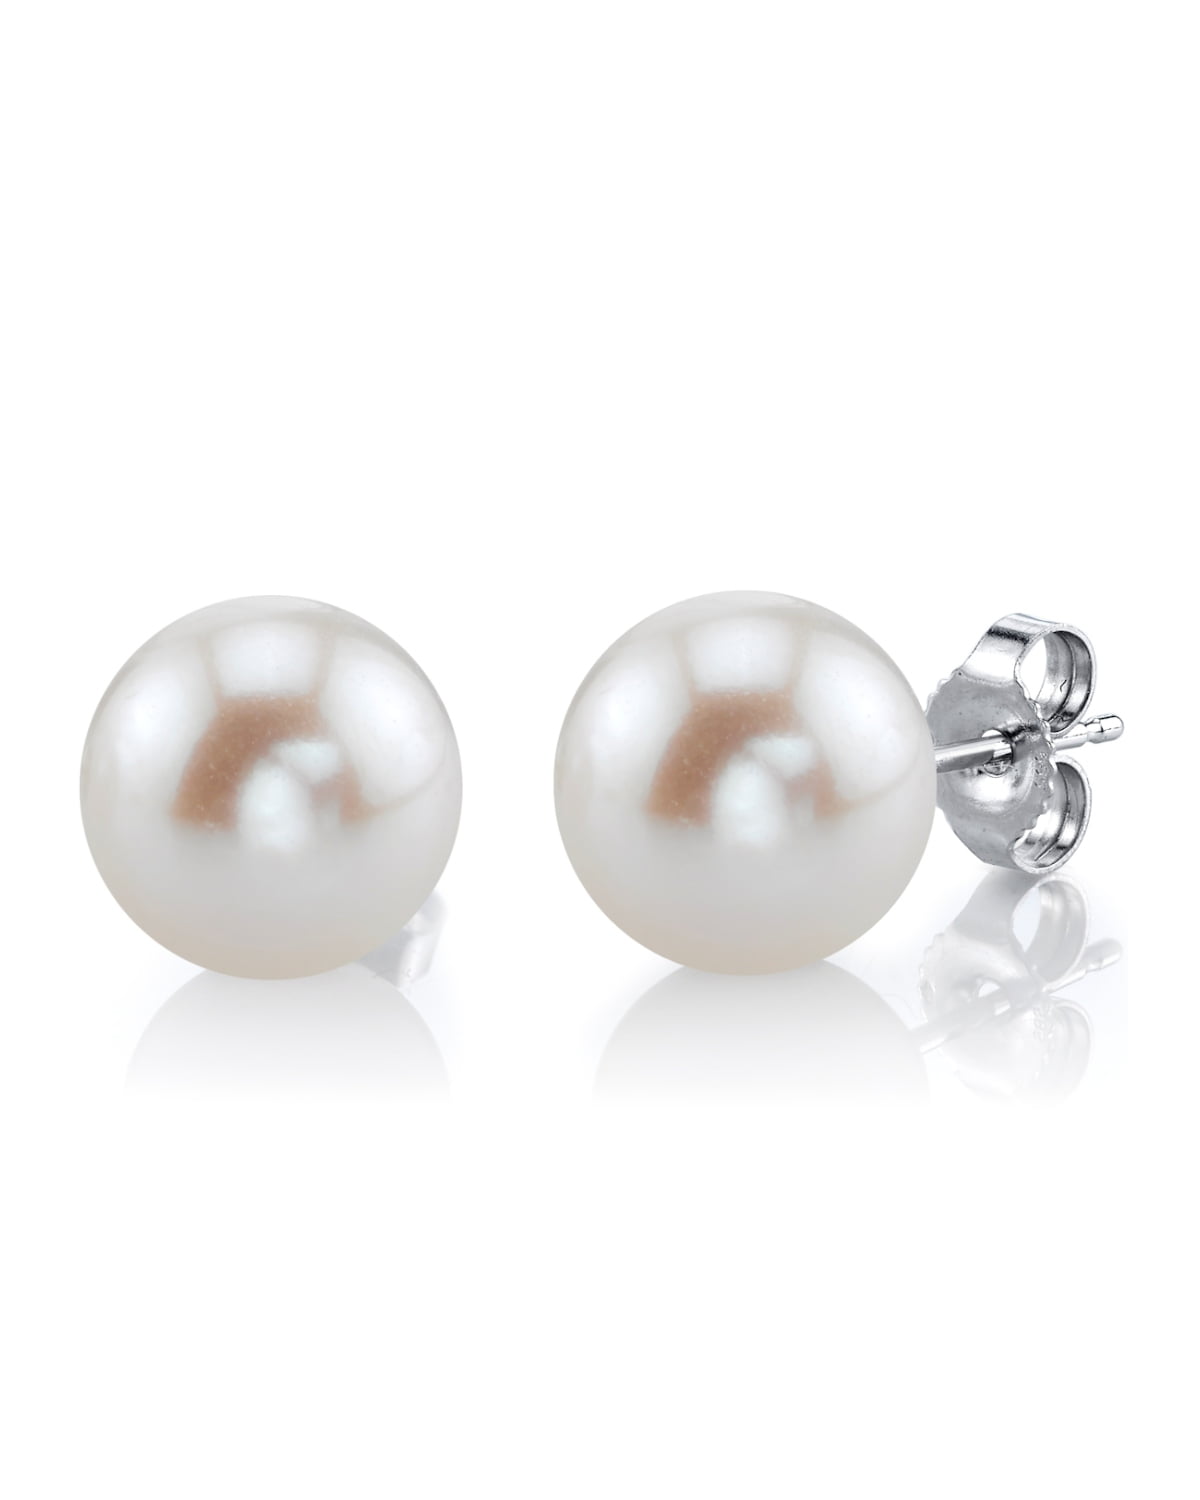 Quality Freshwater Cultured White Pearl Stud Earrings for Women NONNYL 14K Gold Handpicked AAA 